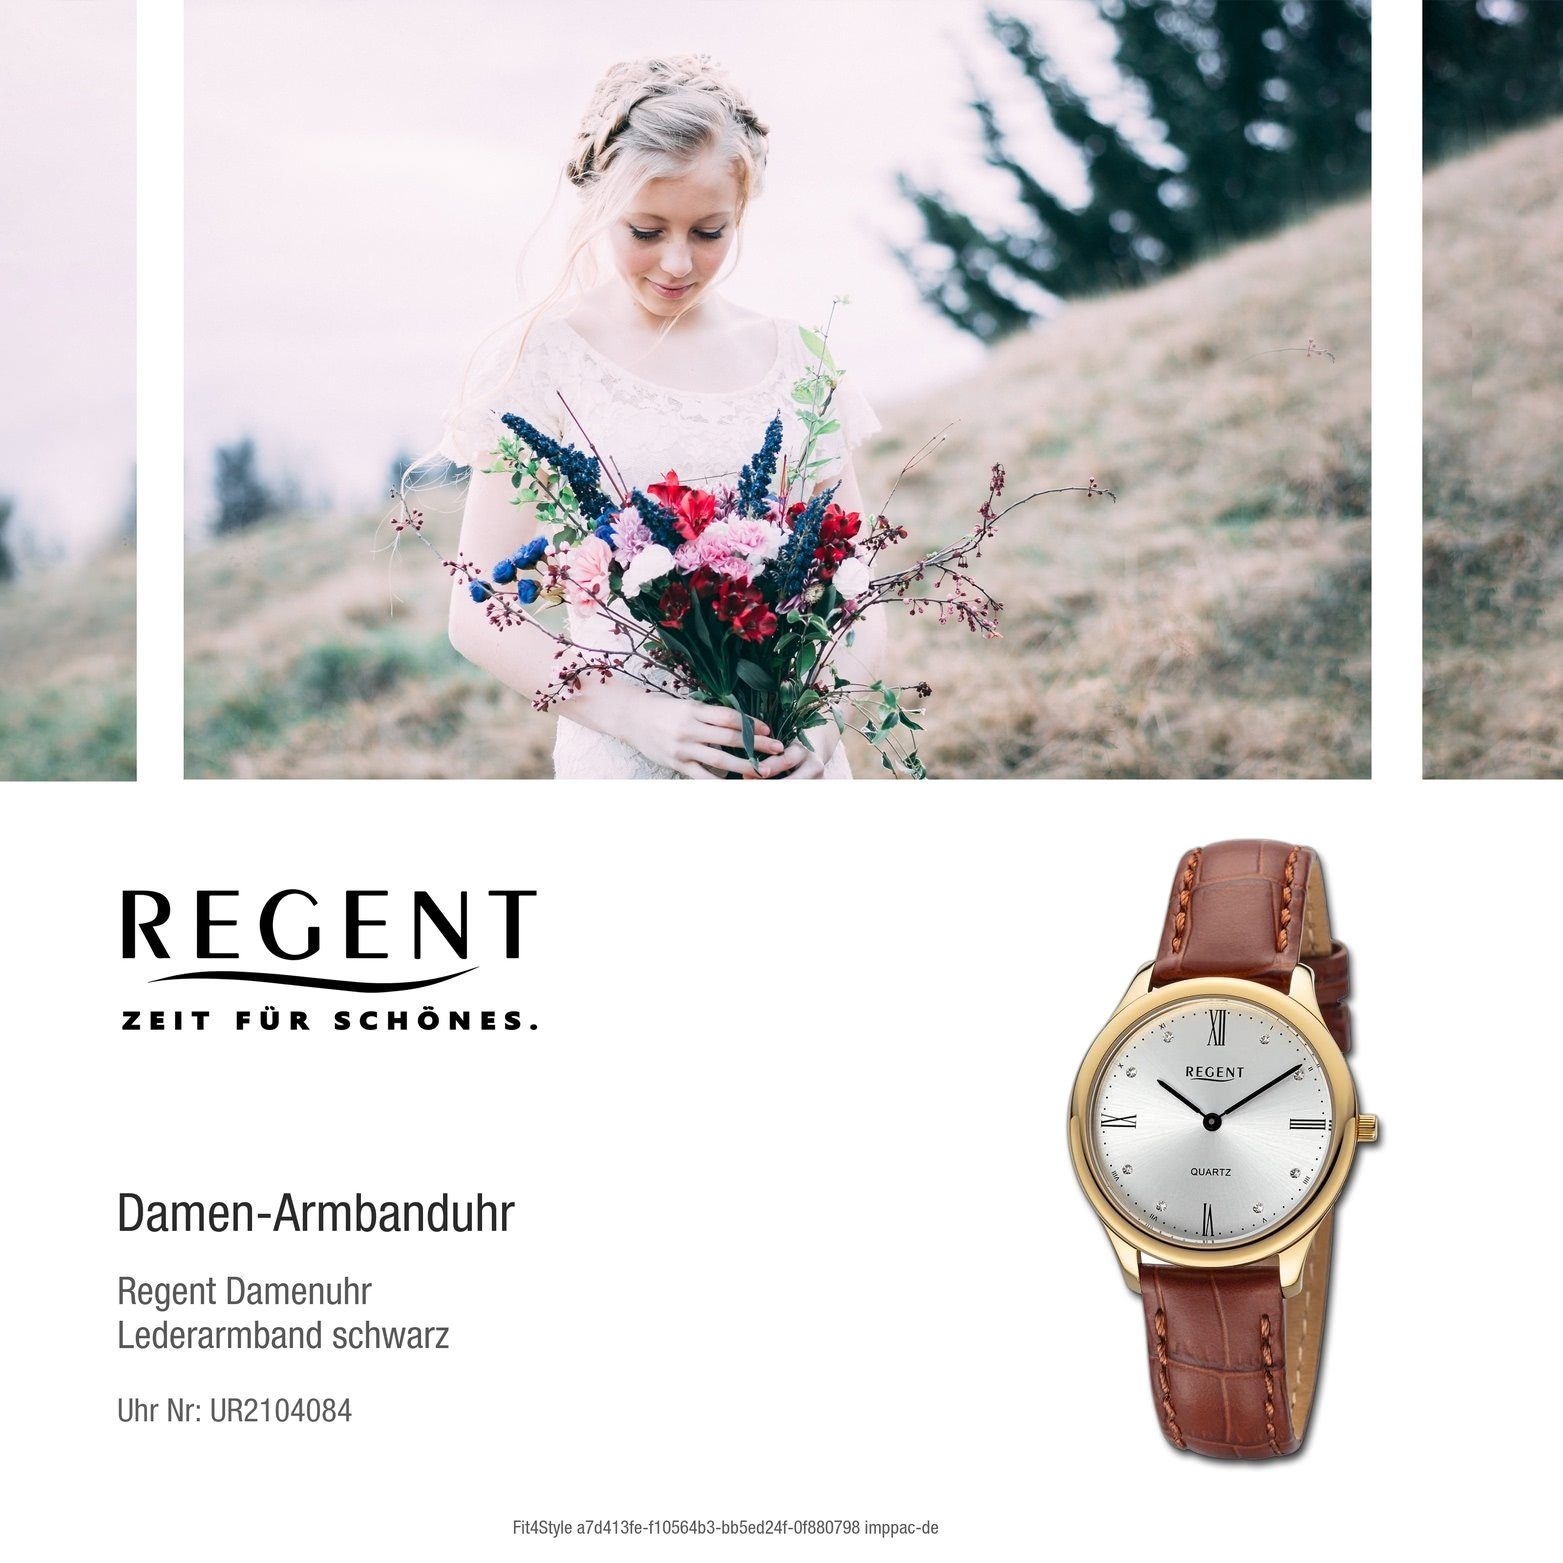 33mm) Damen Armbanduhr Regent Regent schwarz, groß extra rundes Gehäuse, Quarzuhr Analog, Damenuhr Lederarmband (ca.